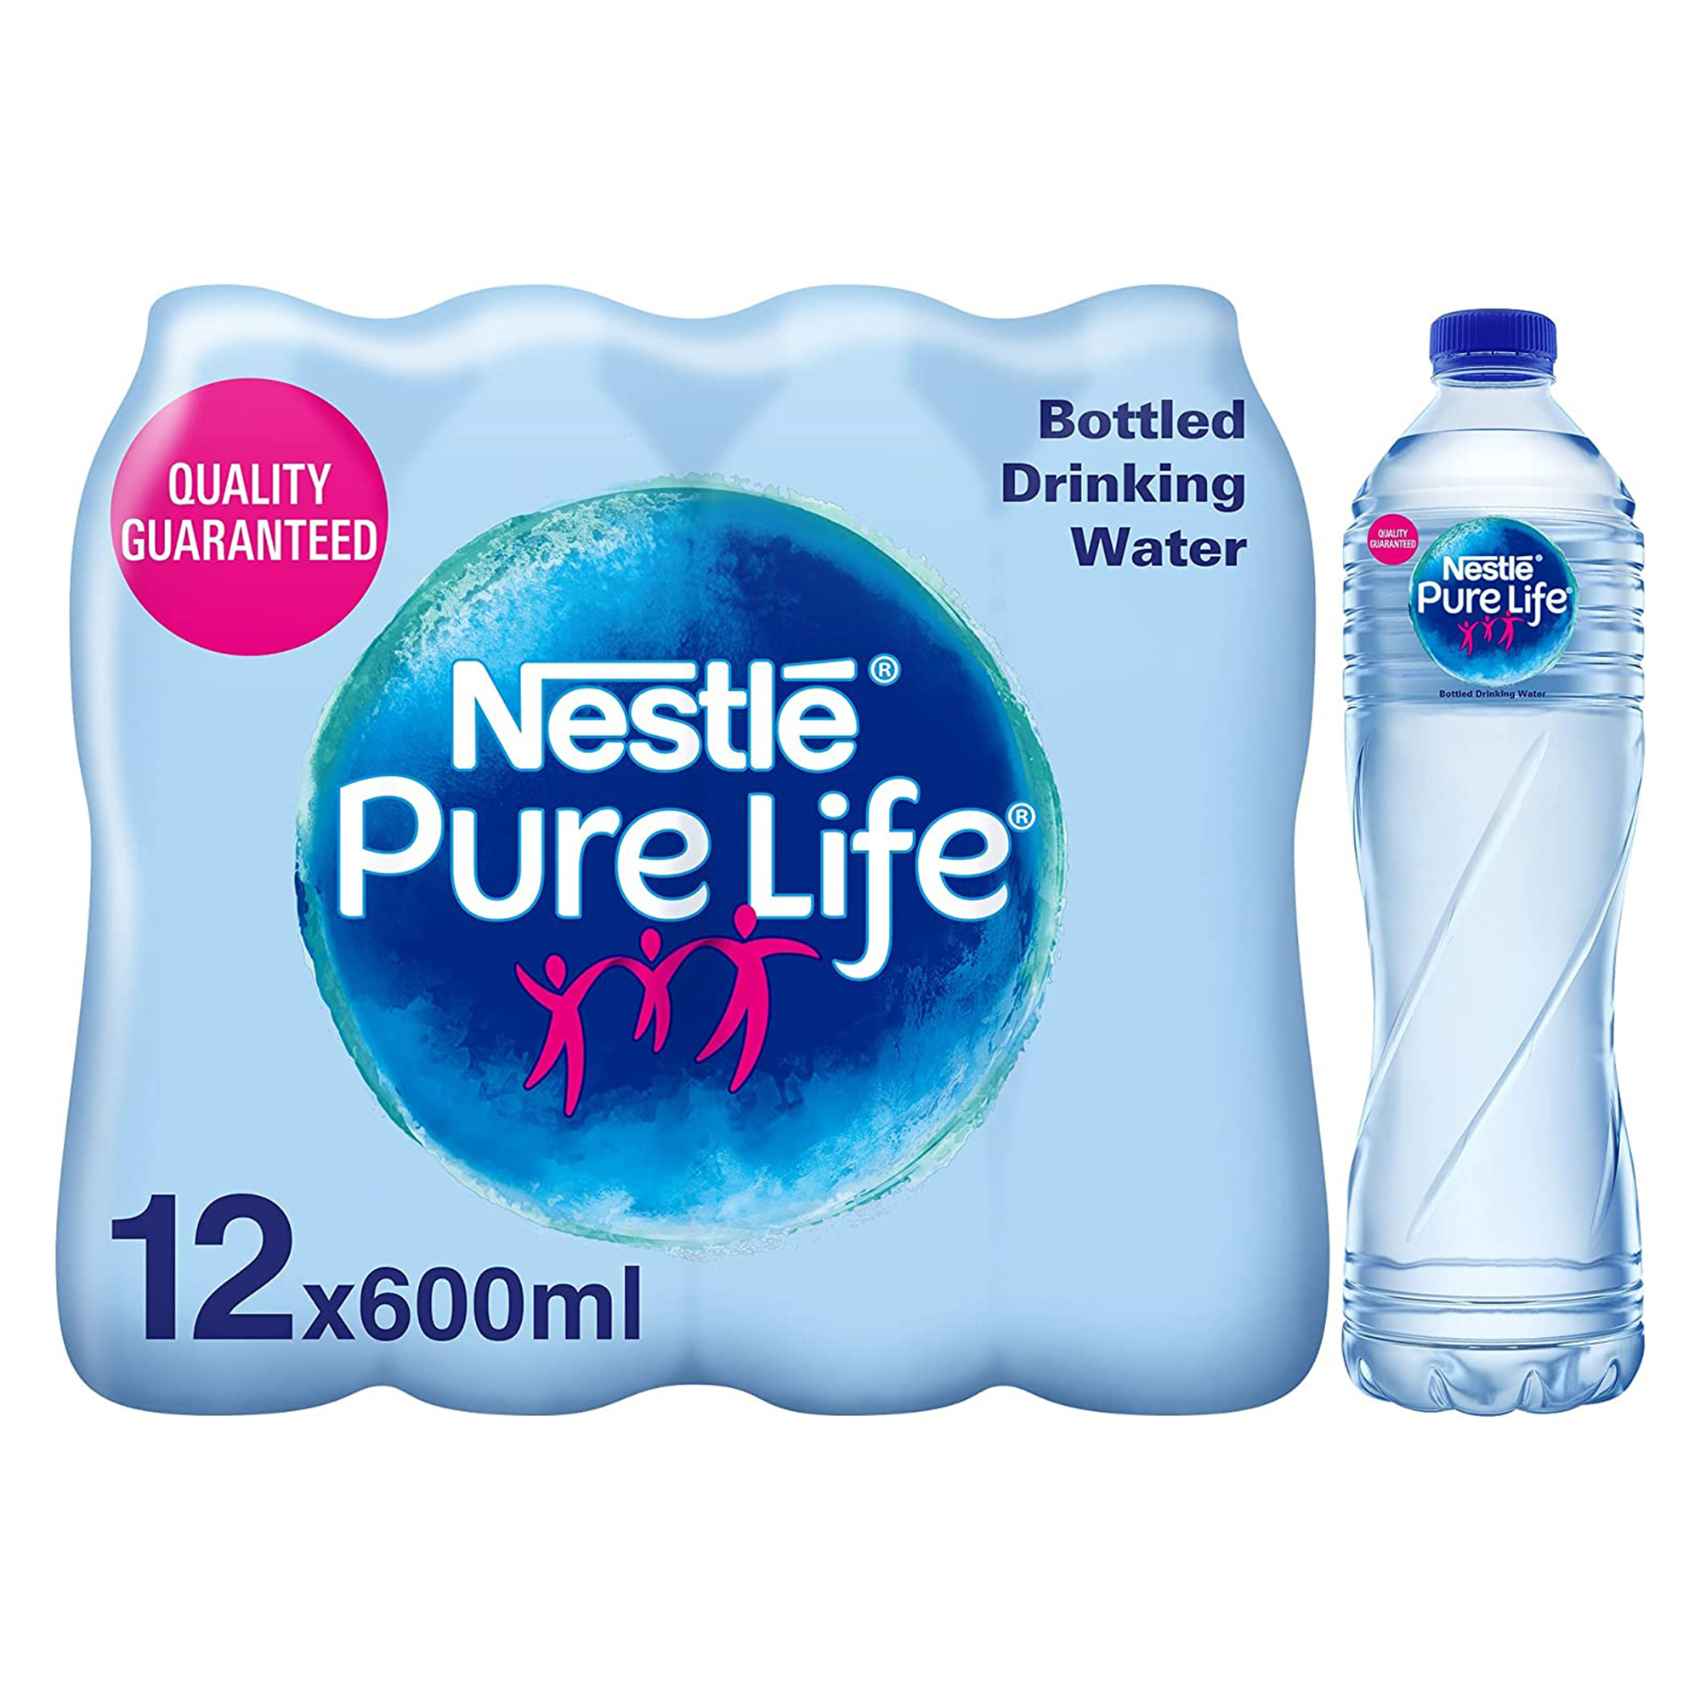 Nestl&eacute; Pure Life Low Sodium Bottled Drinking Water 600ml  Pack of 12 Bottles